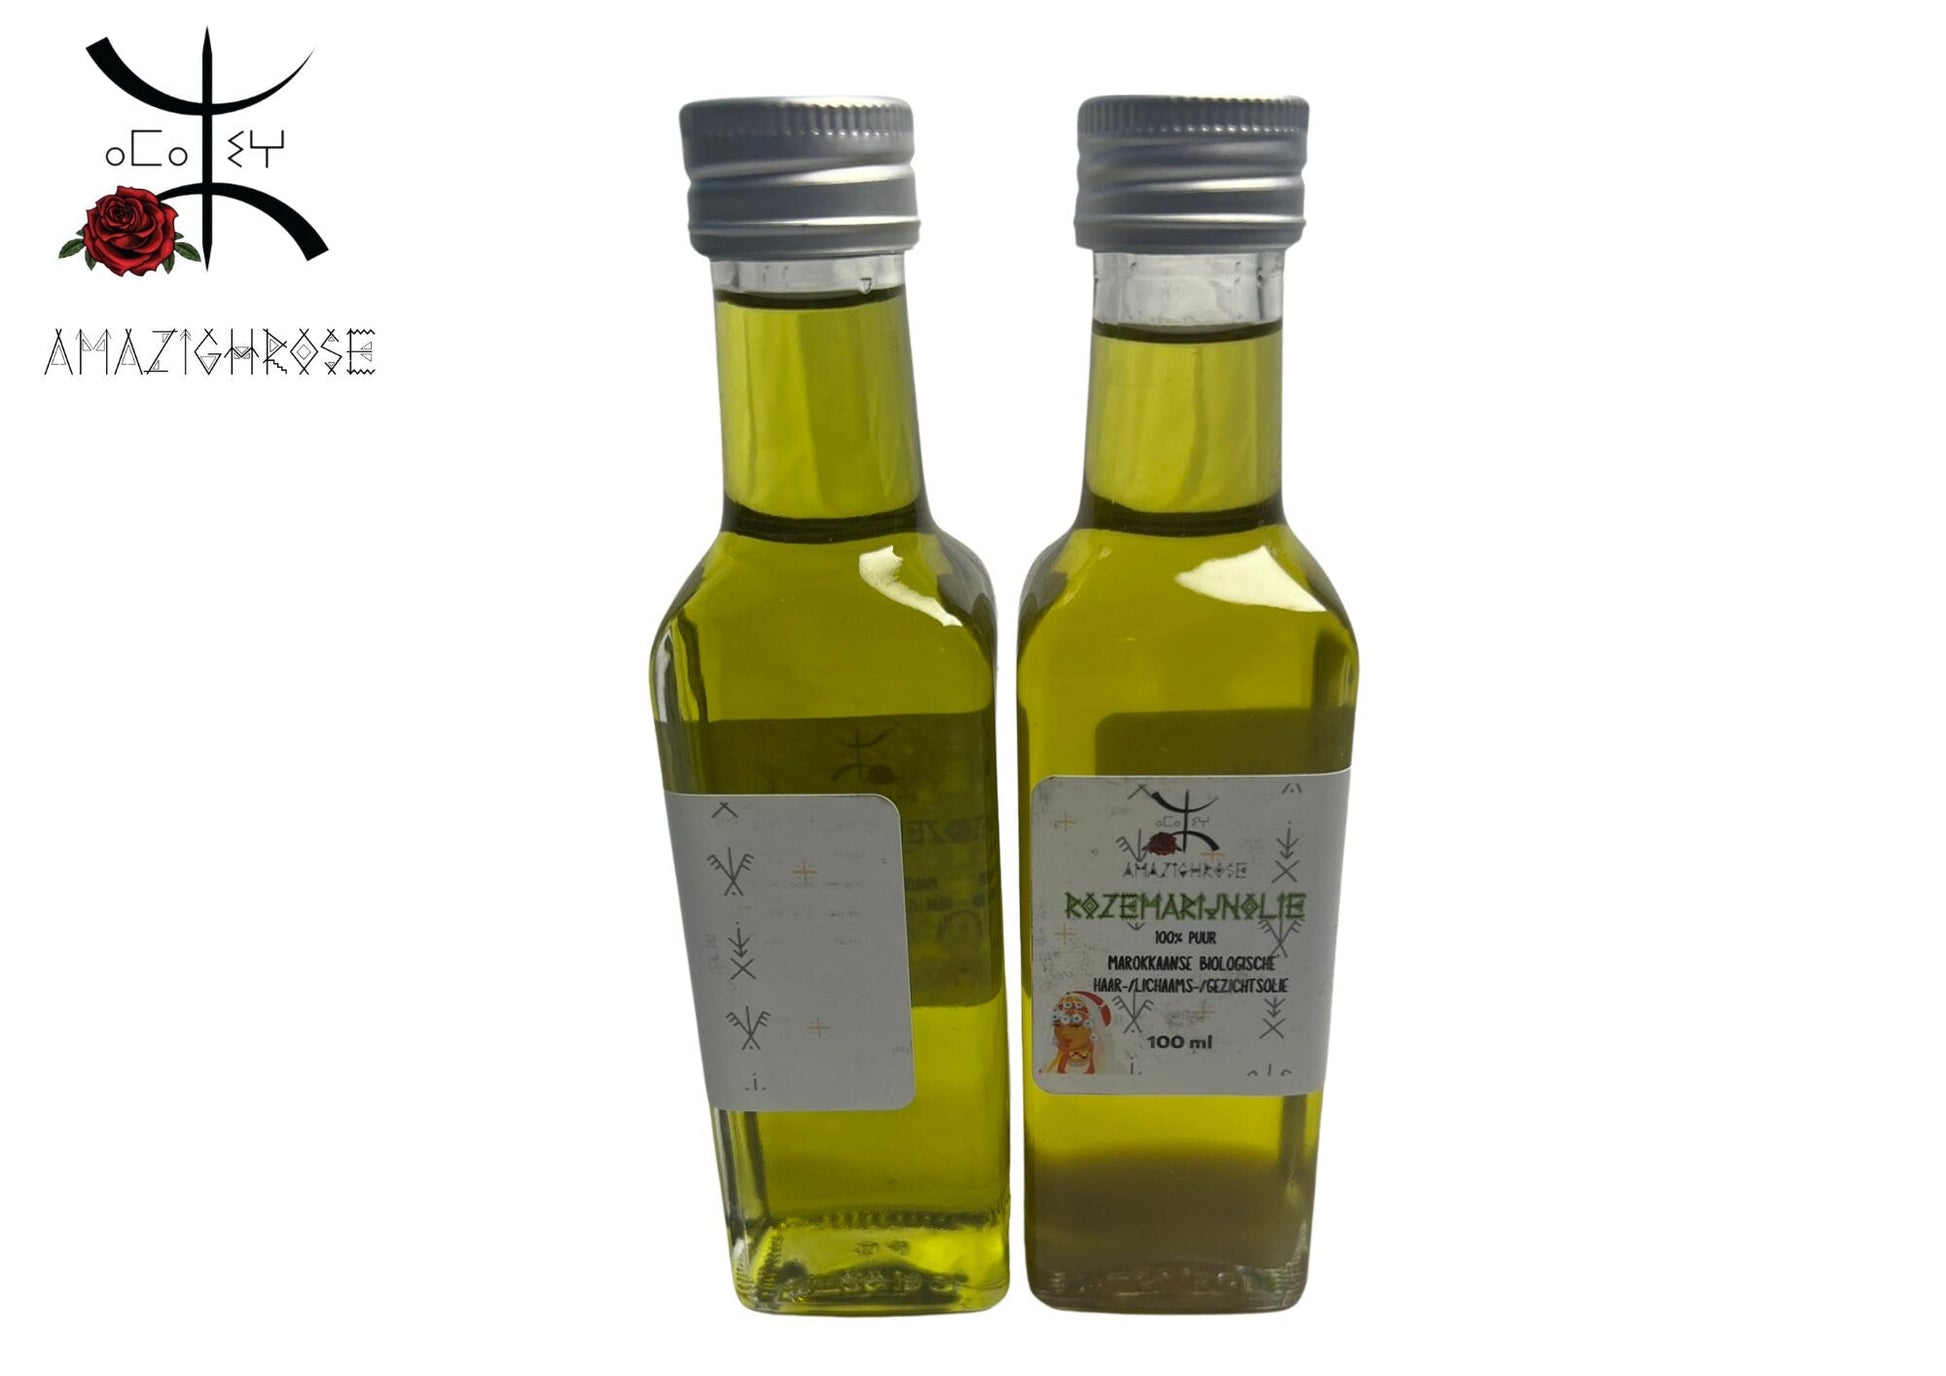 Amazighrose Handmade Rosemary Oil, 100% Organic - Amazighrose